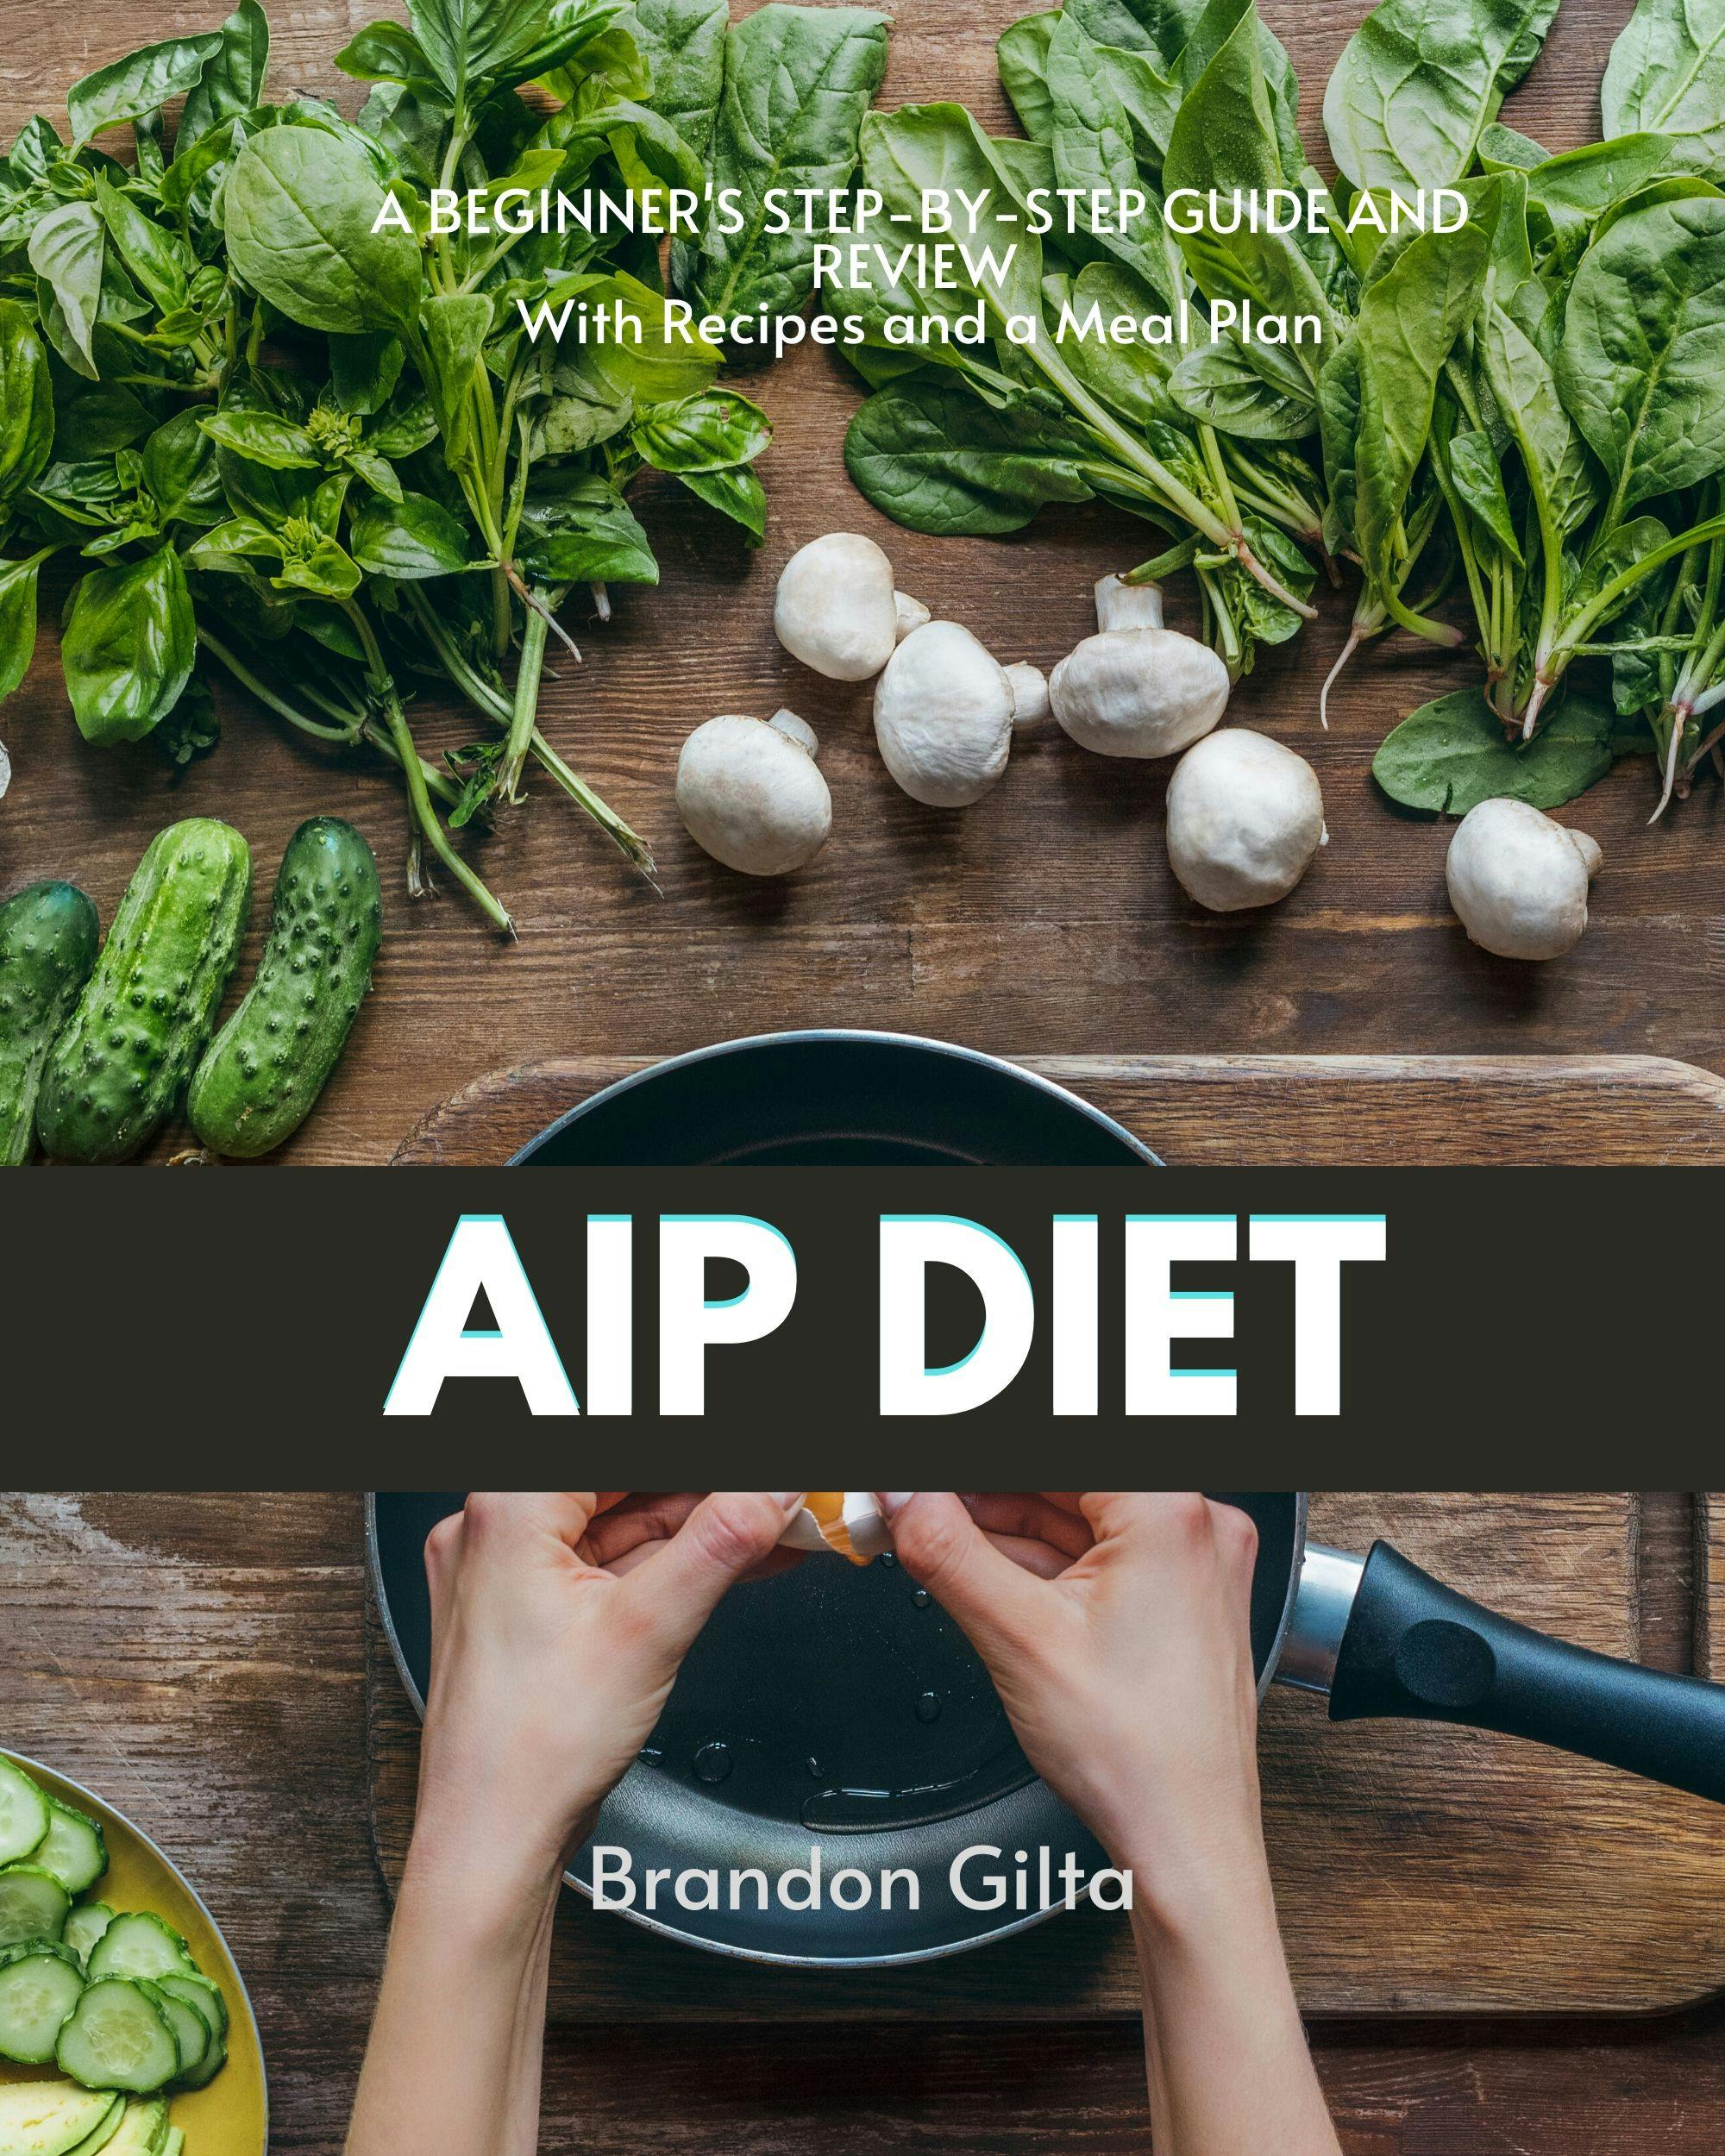 AIP (Autoimmune Paleo) Diet - Brandon Gilta